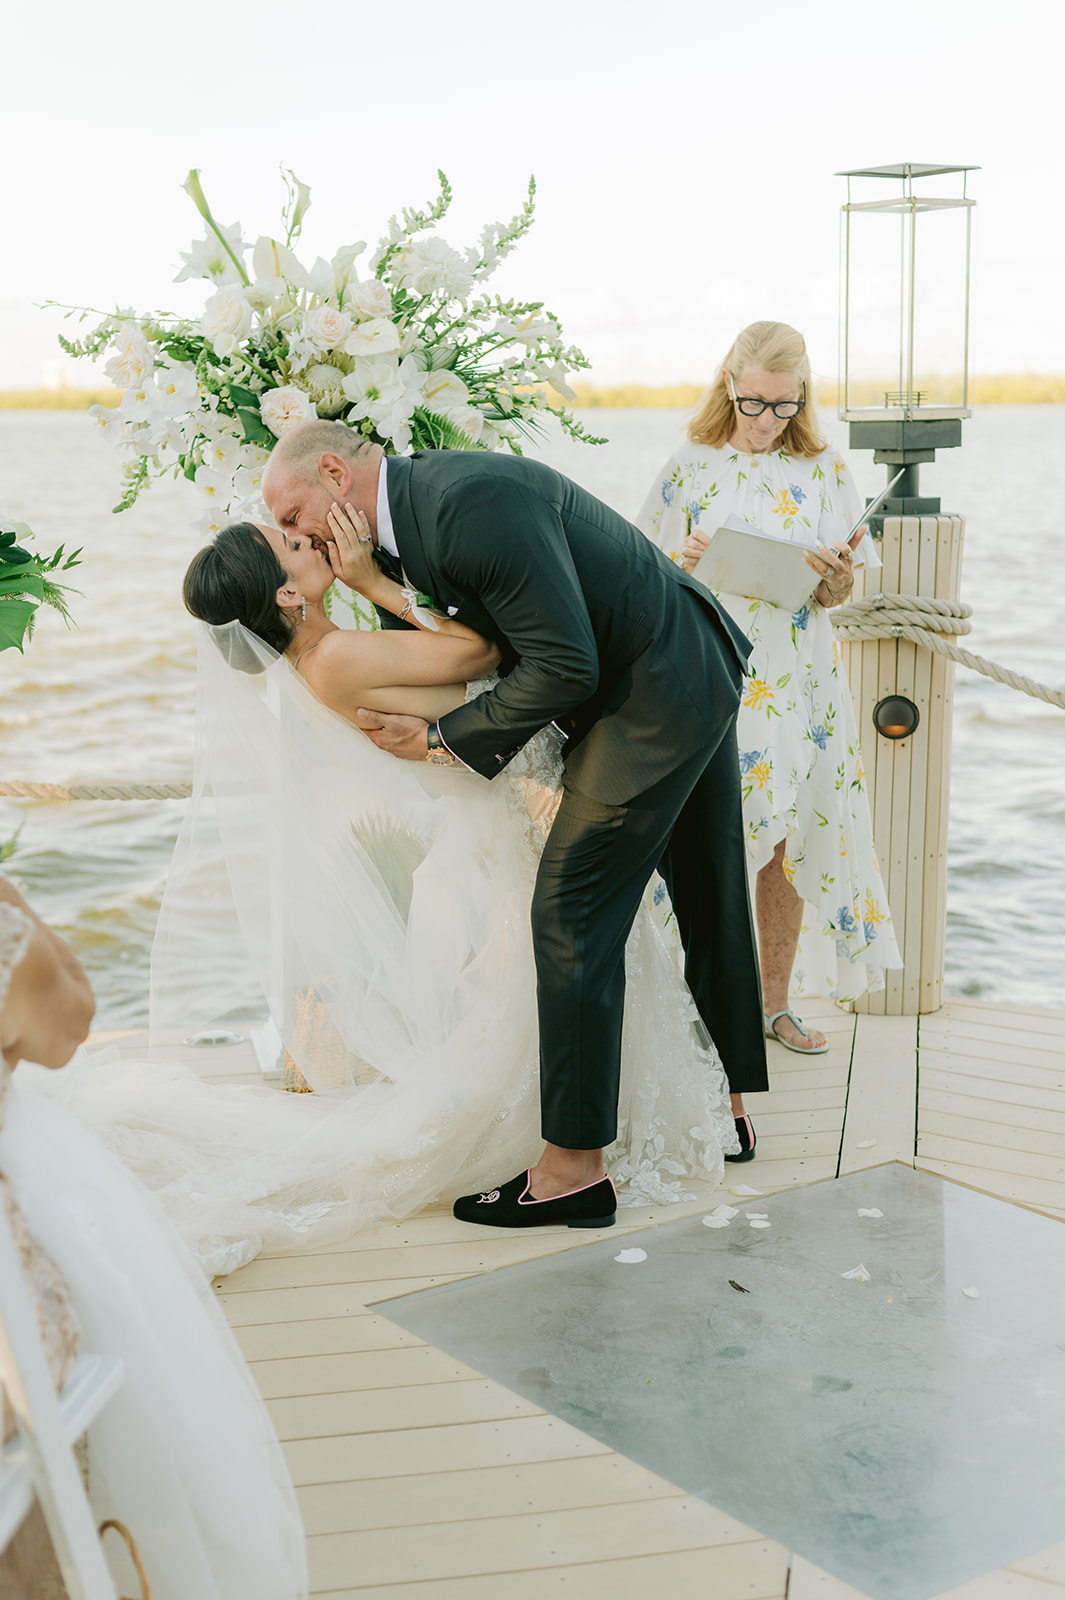 Fine Art Wedding Photography for a Dreamy Naples Florida Wedding - Beautiful Memories
